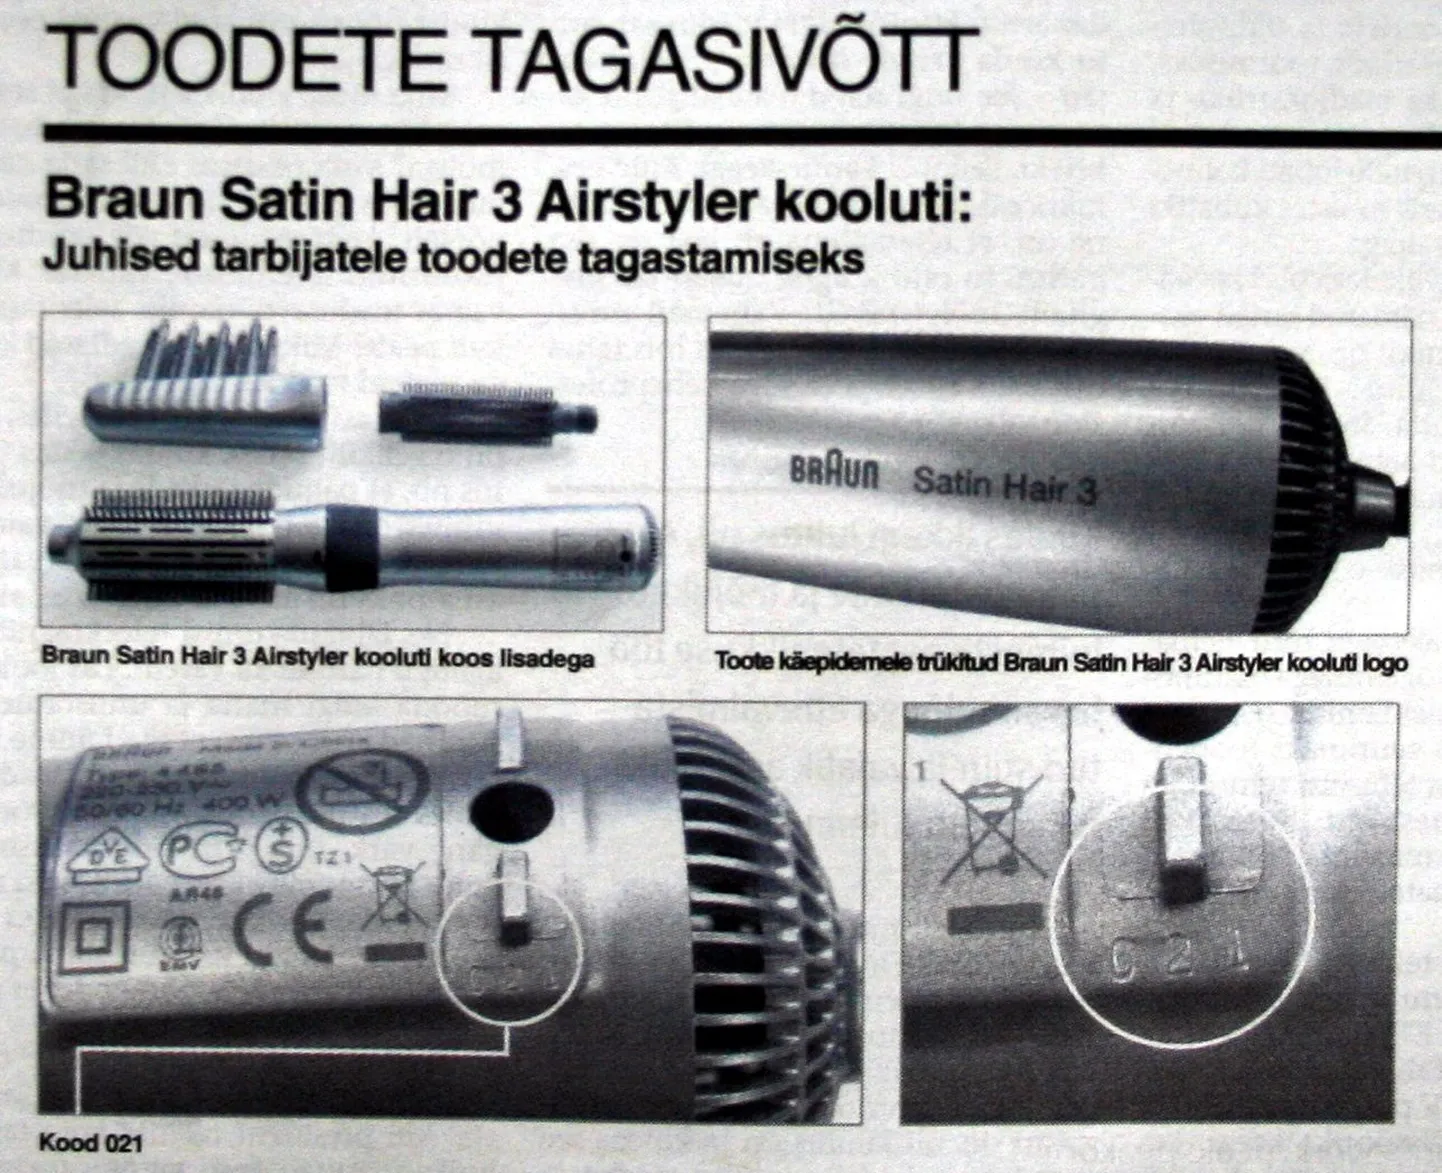 Braun Satin Hair 3 Airstyle kooluti, tootekoodiga 021.